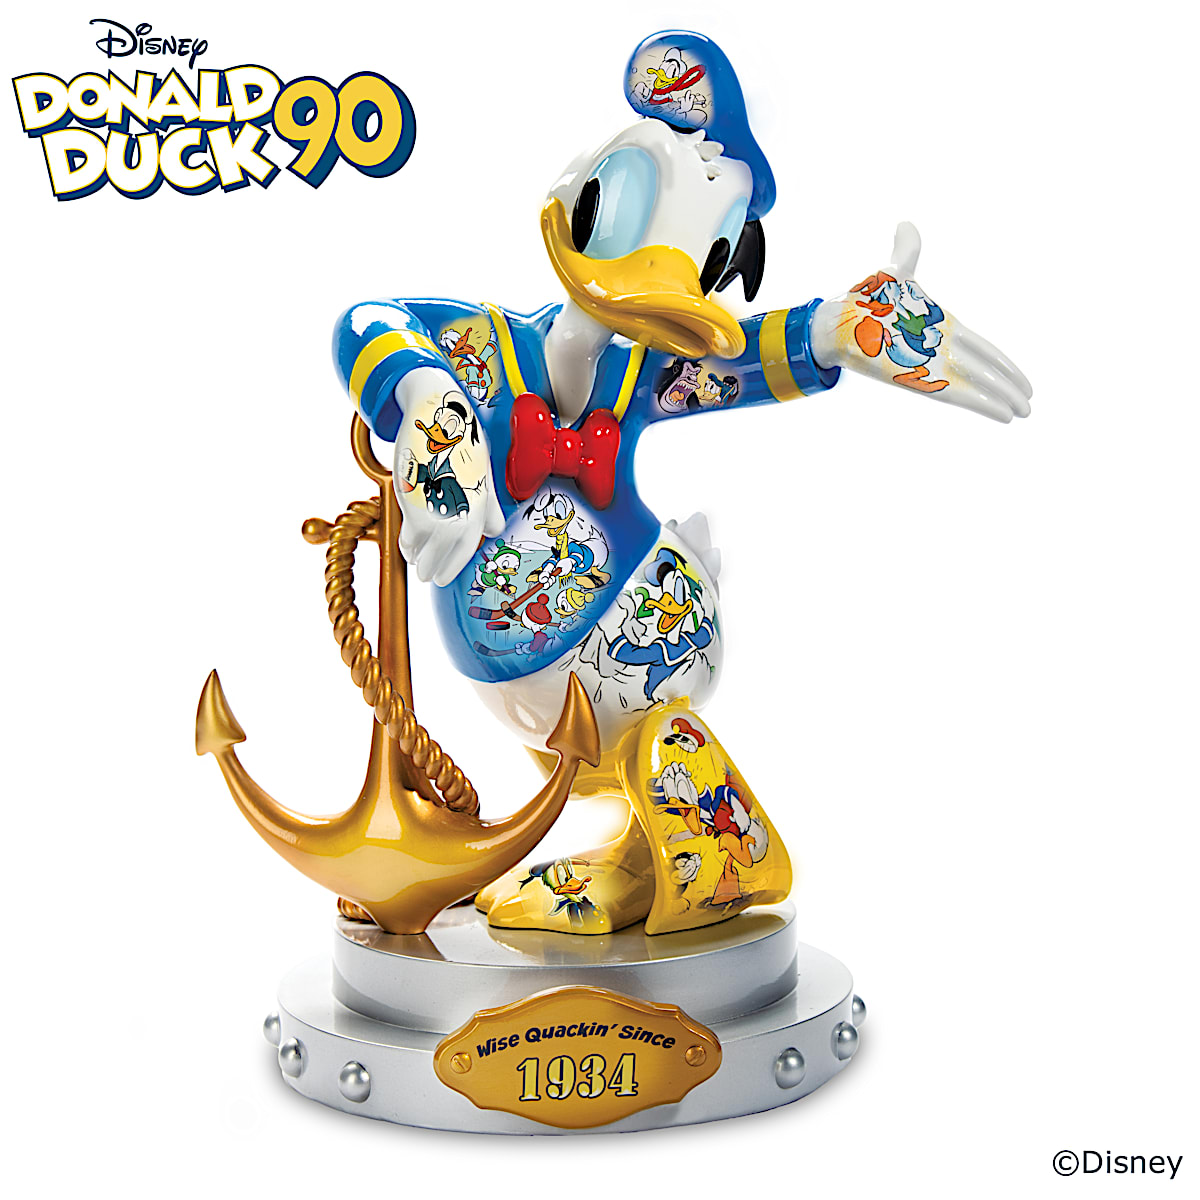 Disney's Donald Duck 90th Anniversary Masterpiece Sculpture